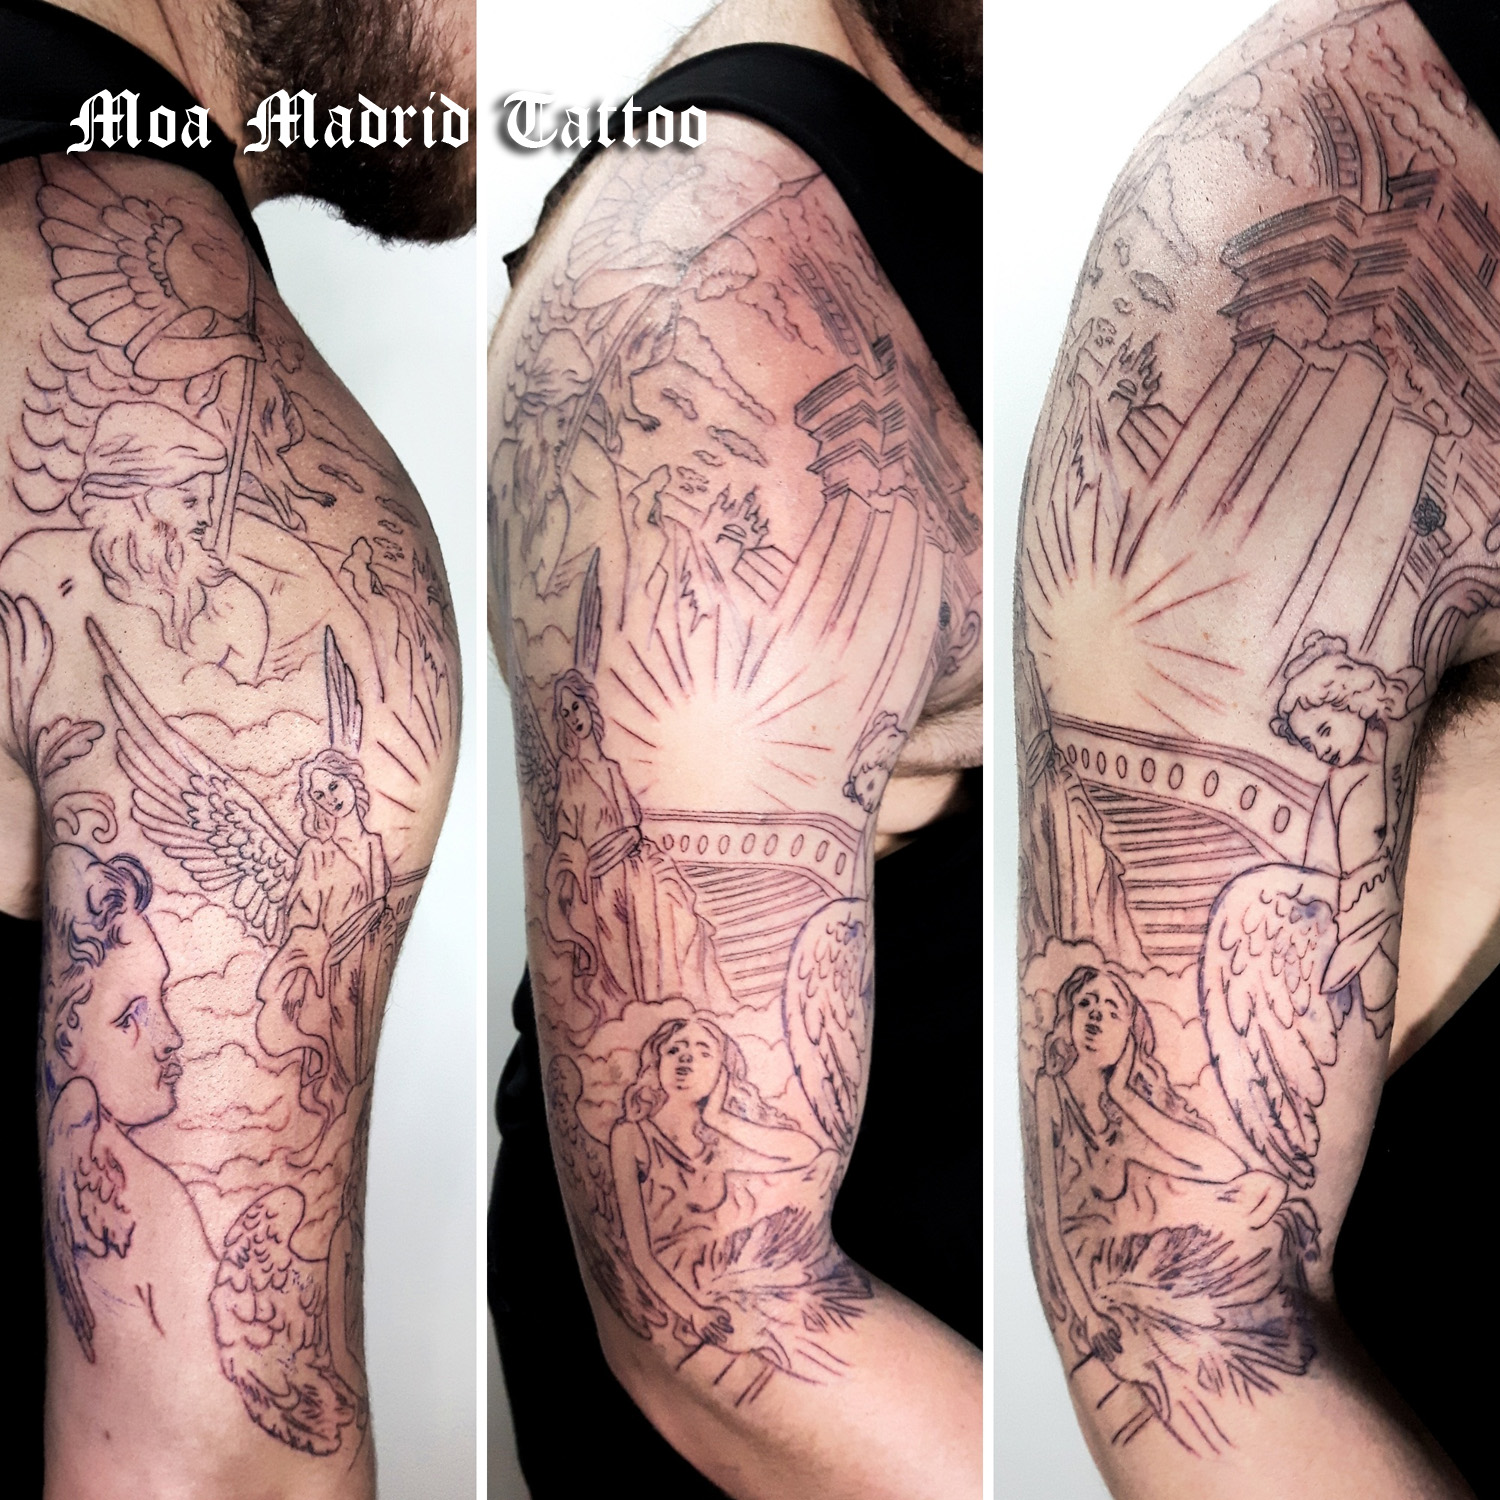 Diseño de brazo entero tatuado de esculturas